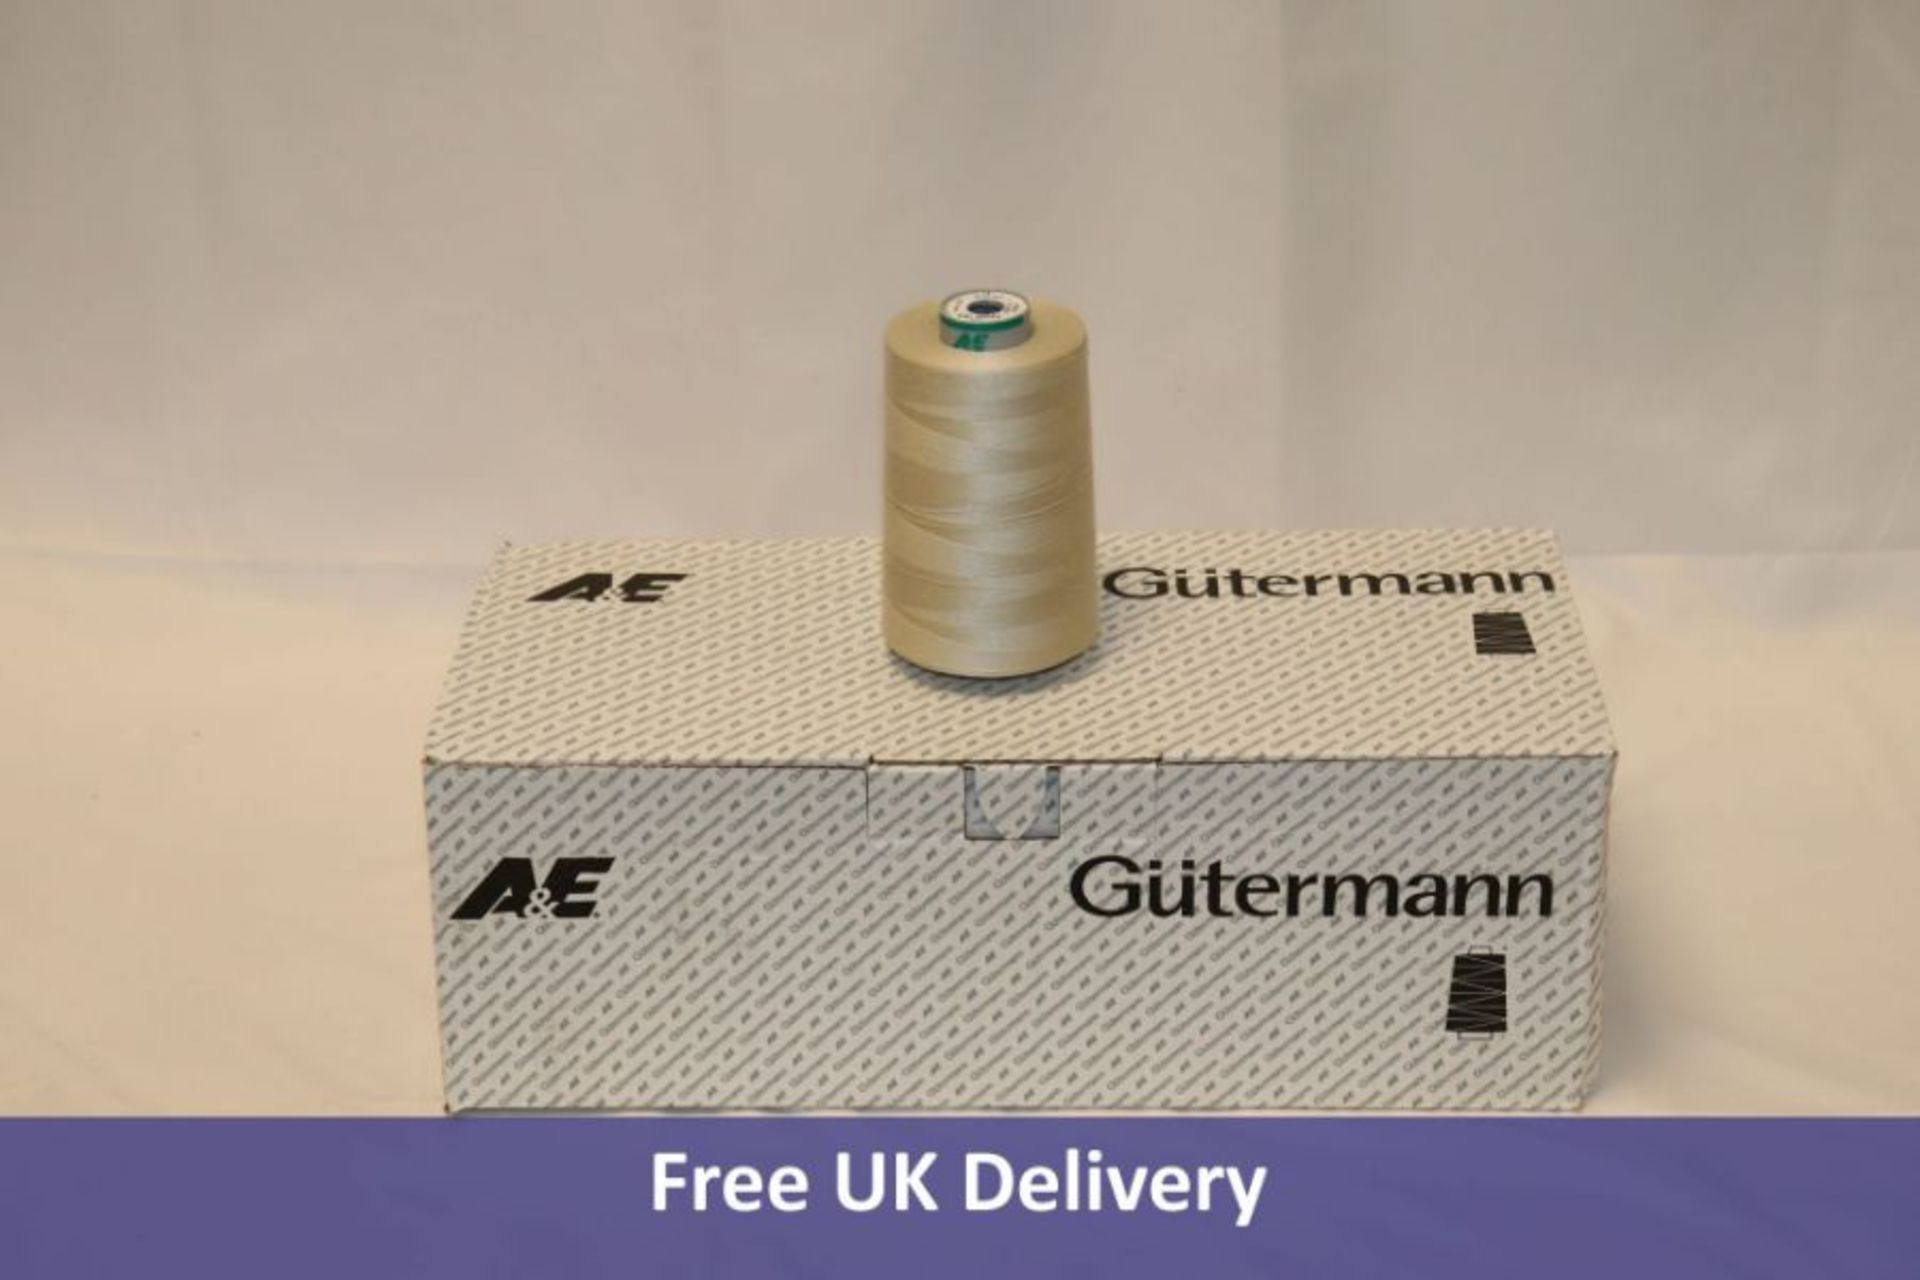 Ten Rolls Gutermann Perma core 75 Thread for denim and heavy duty seams 44500